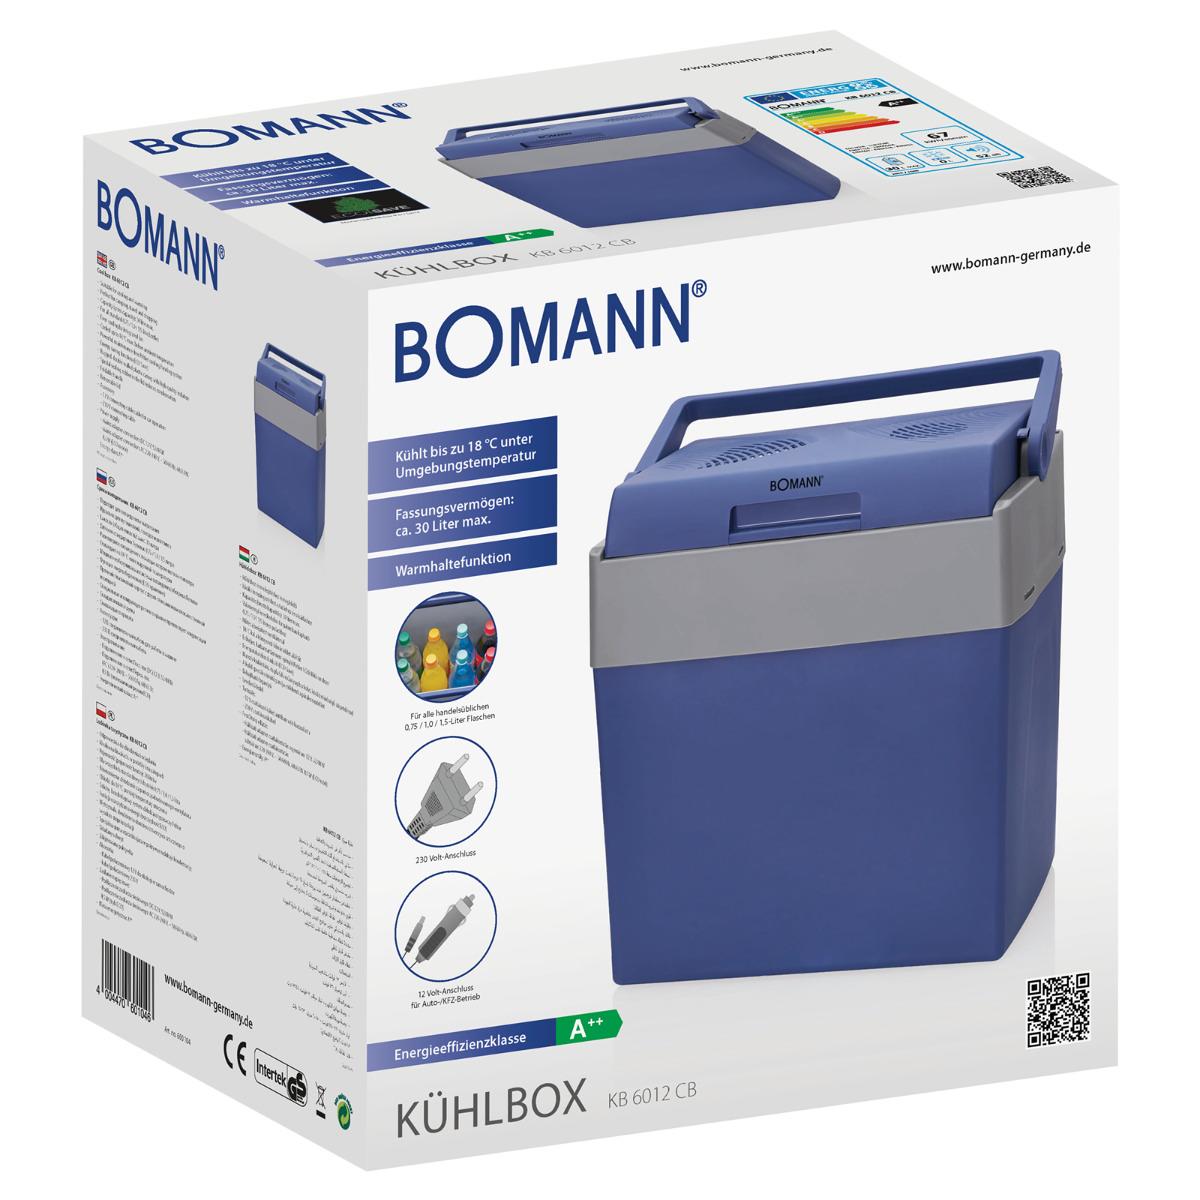 Bomann KB 6012 CB Kühlbox, 30L, 230 V, 68 W, kalt/warm, ECO-Save